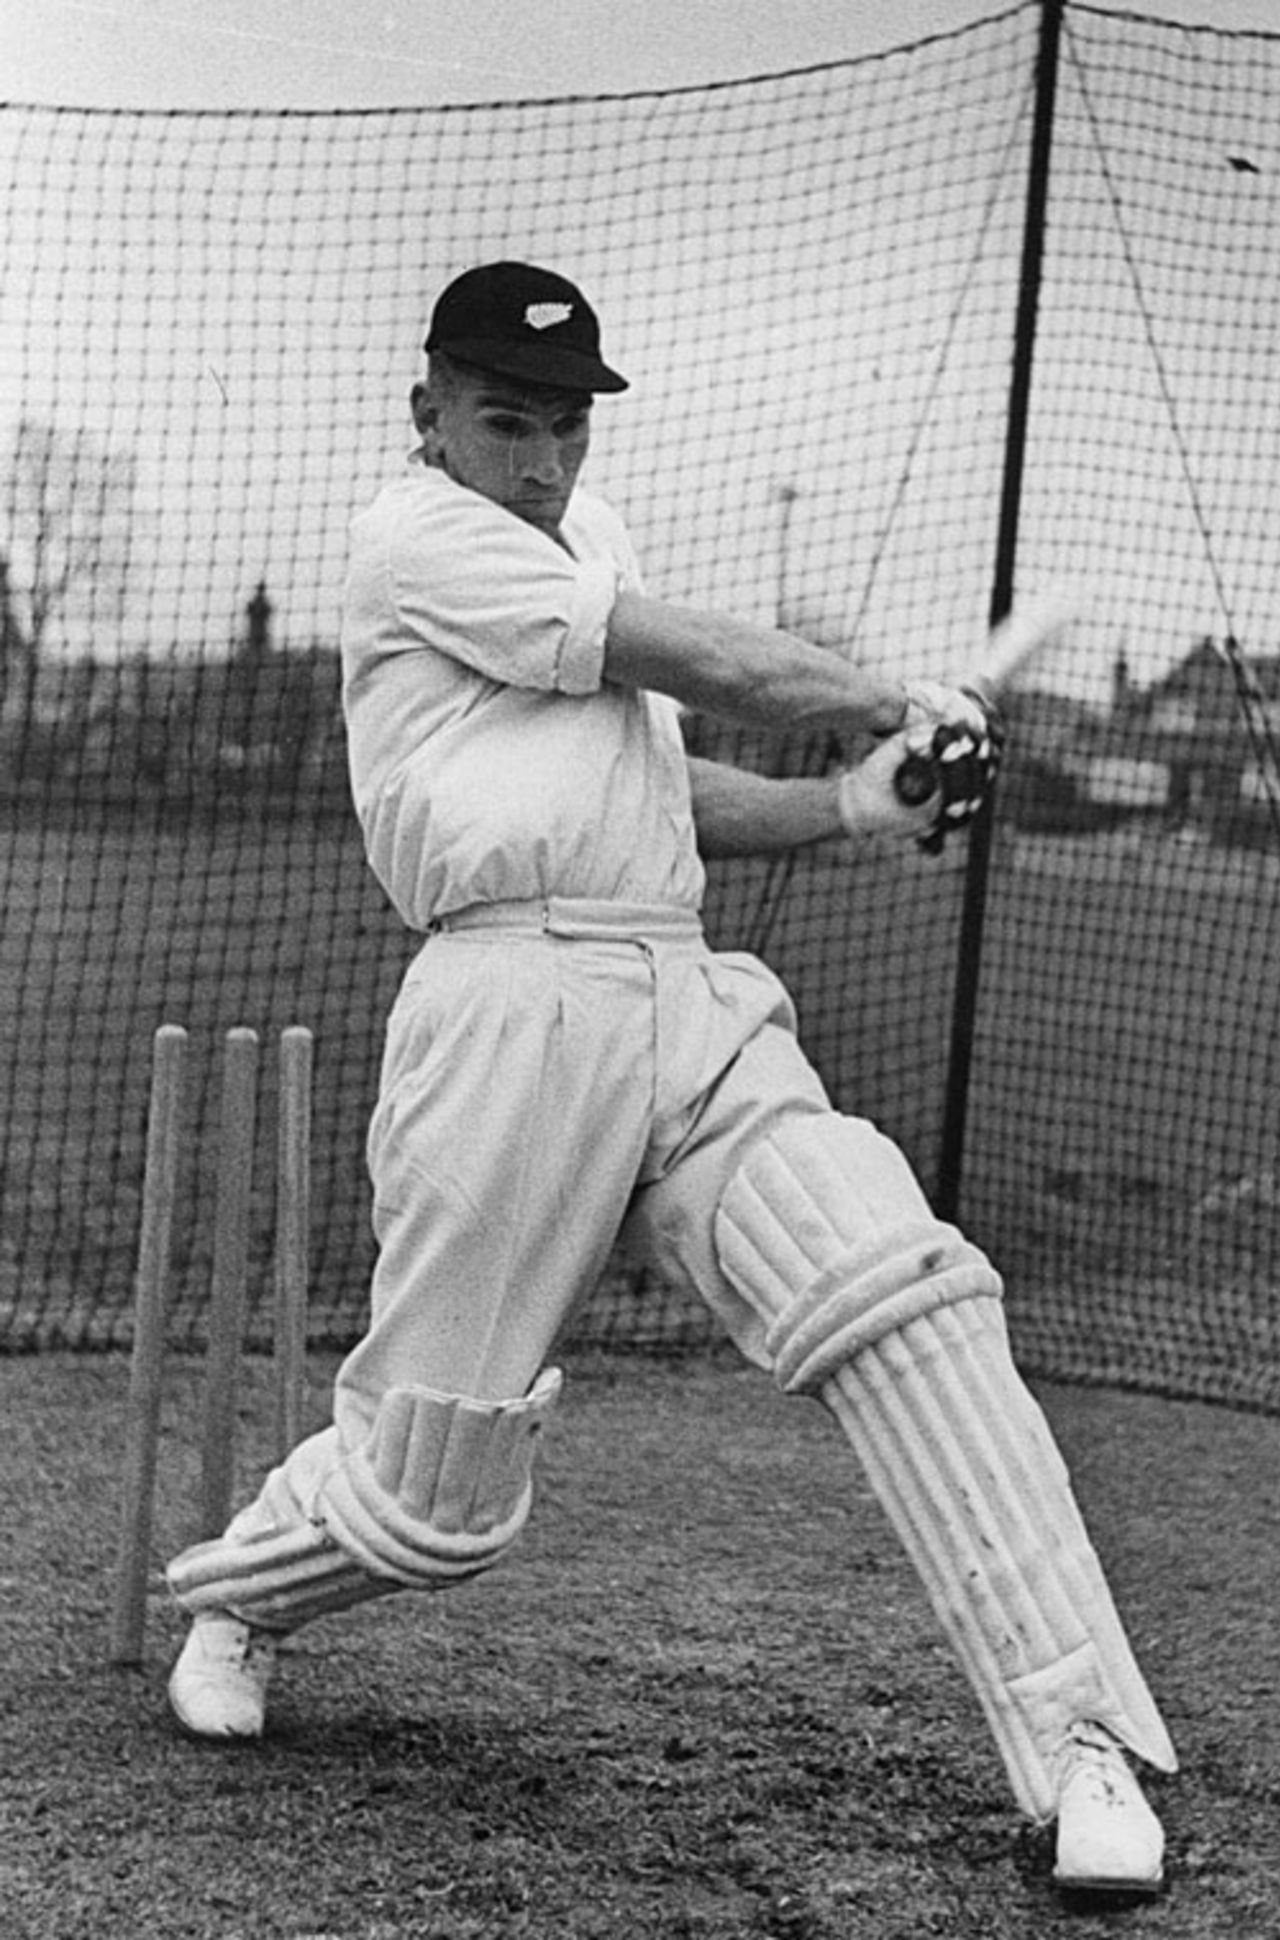 John Reid bats hits out in the nets, Bradford, May 1, 1949